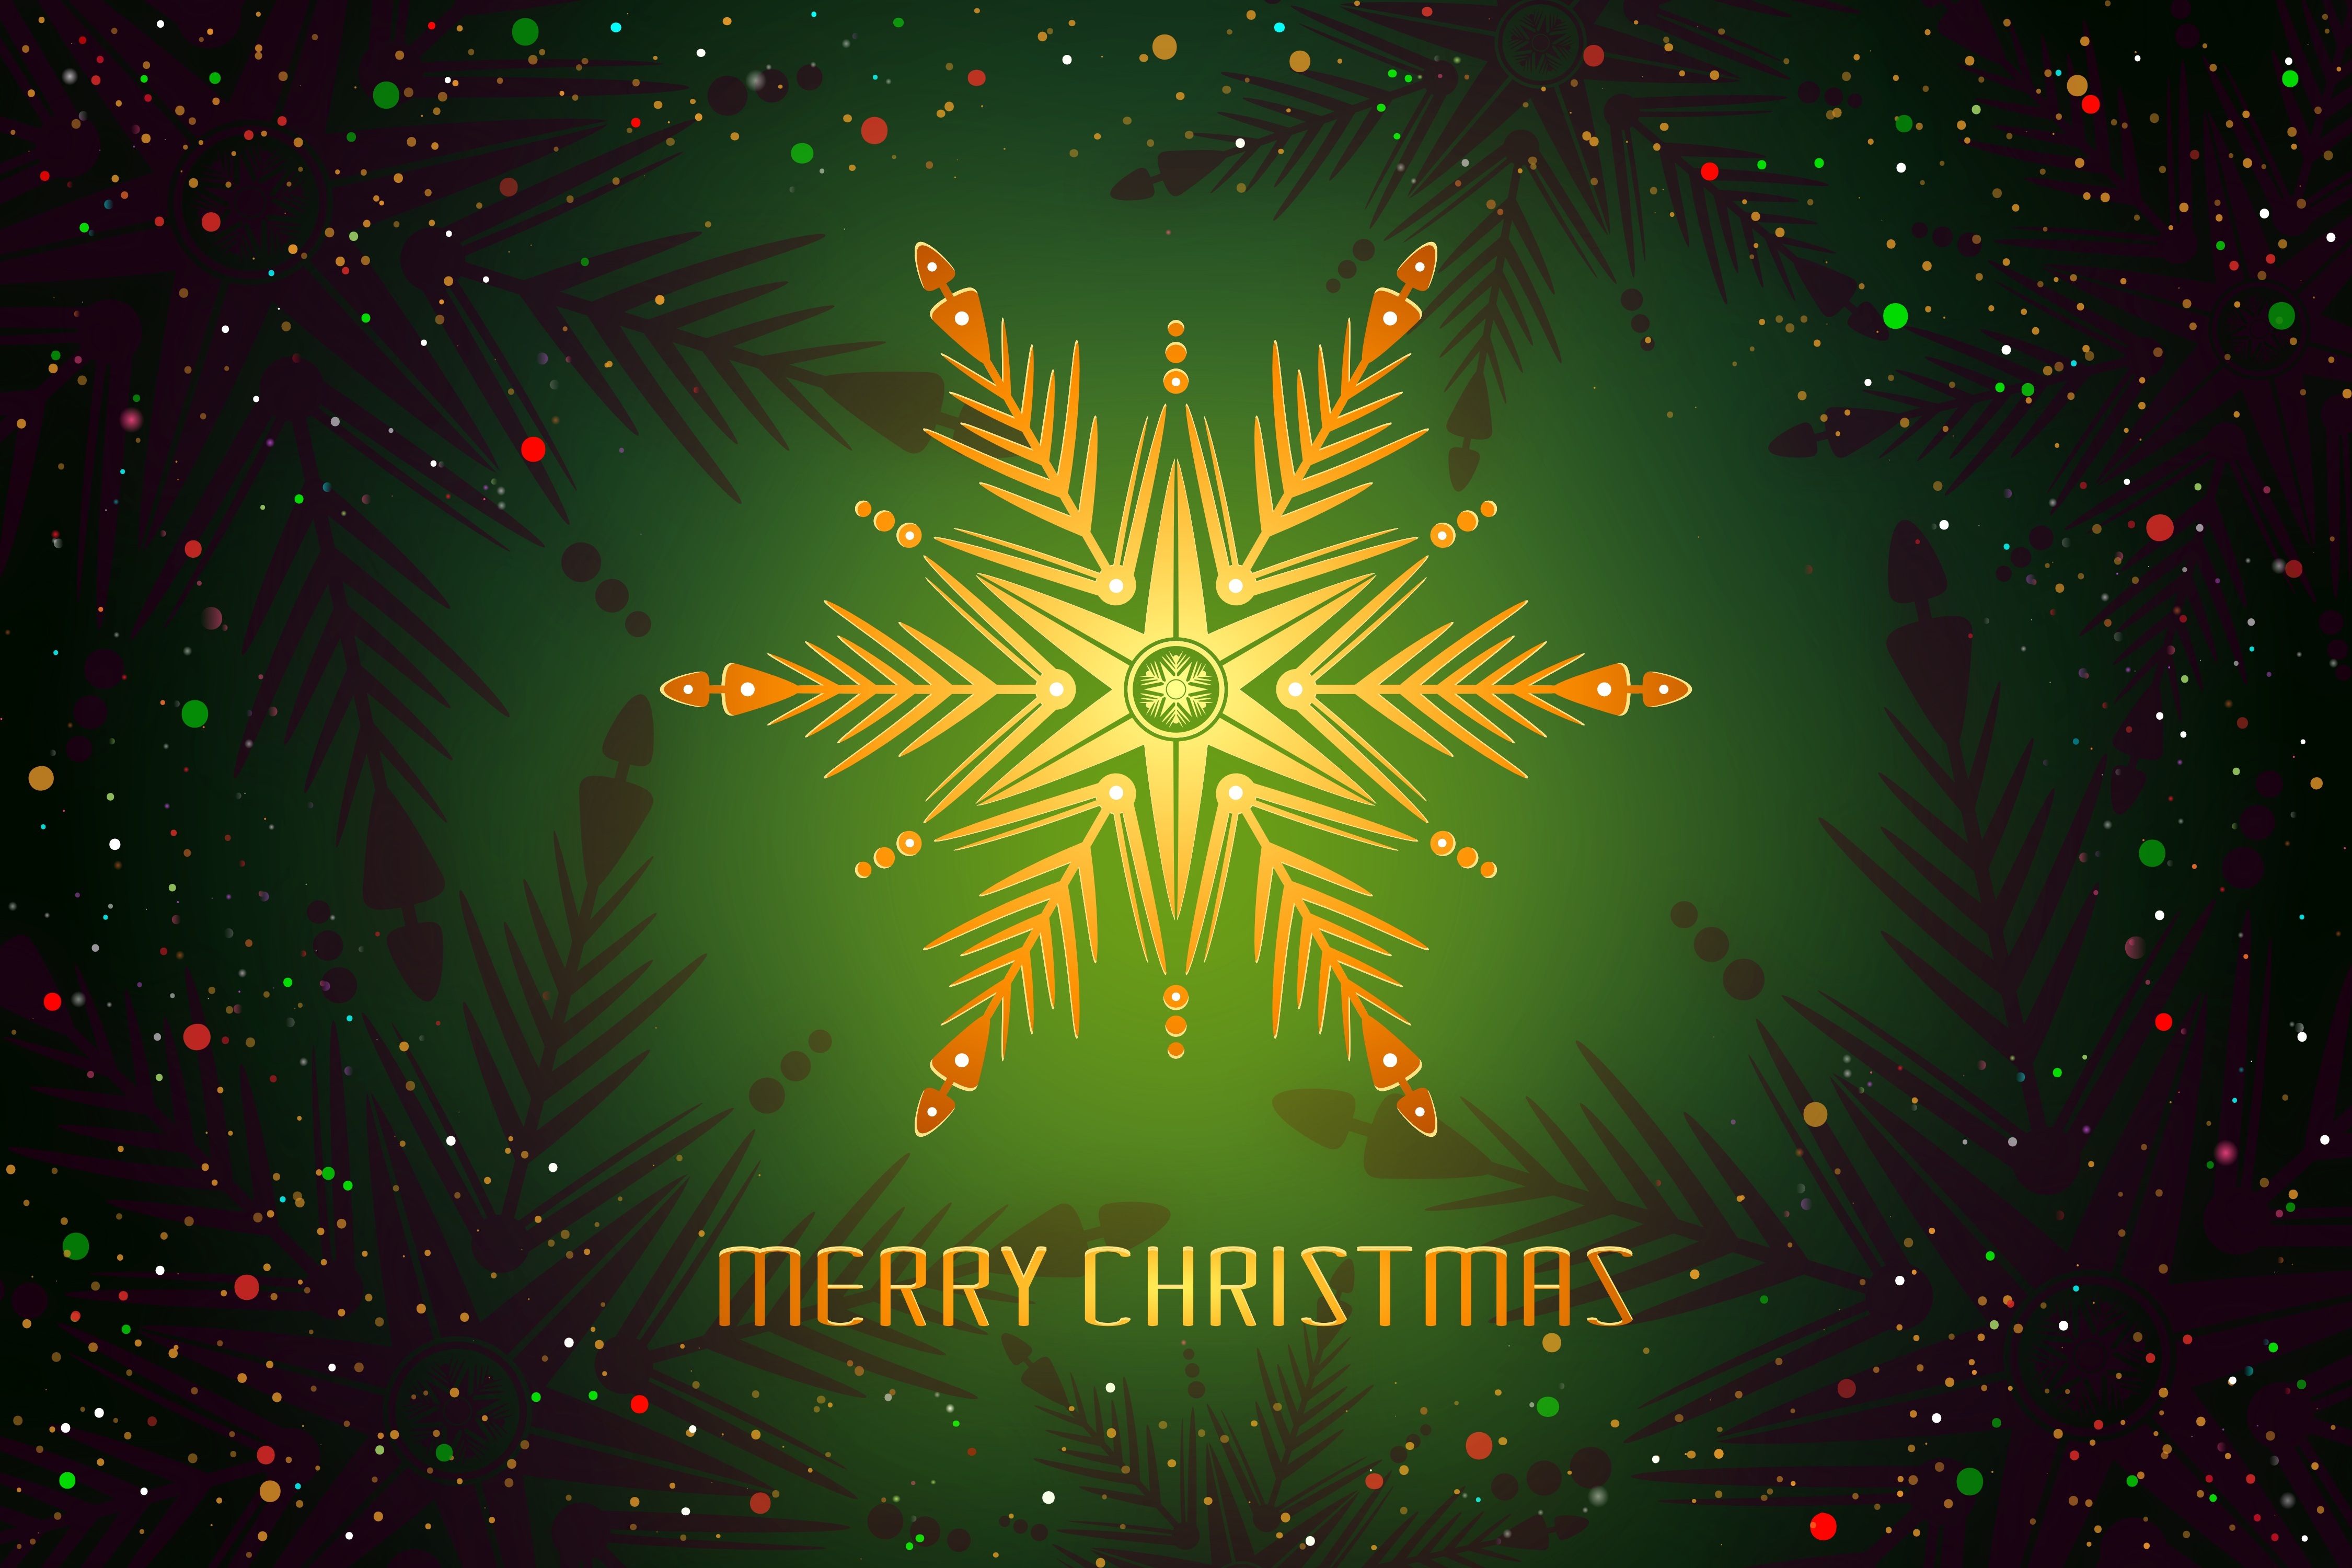 Merry Christmas (Green) 4K UHD Wallpaper